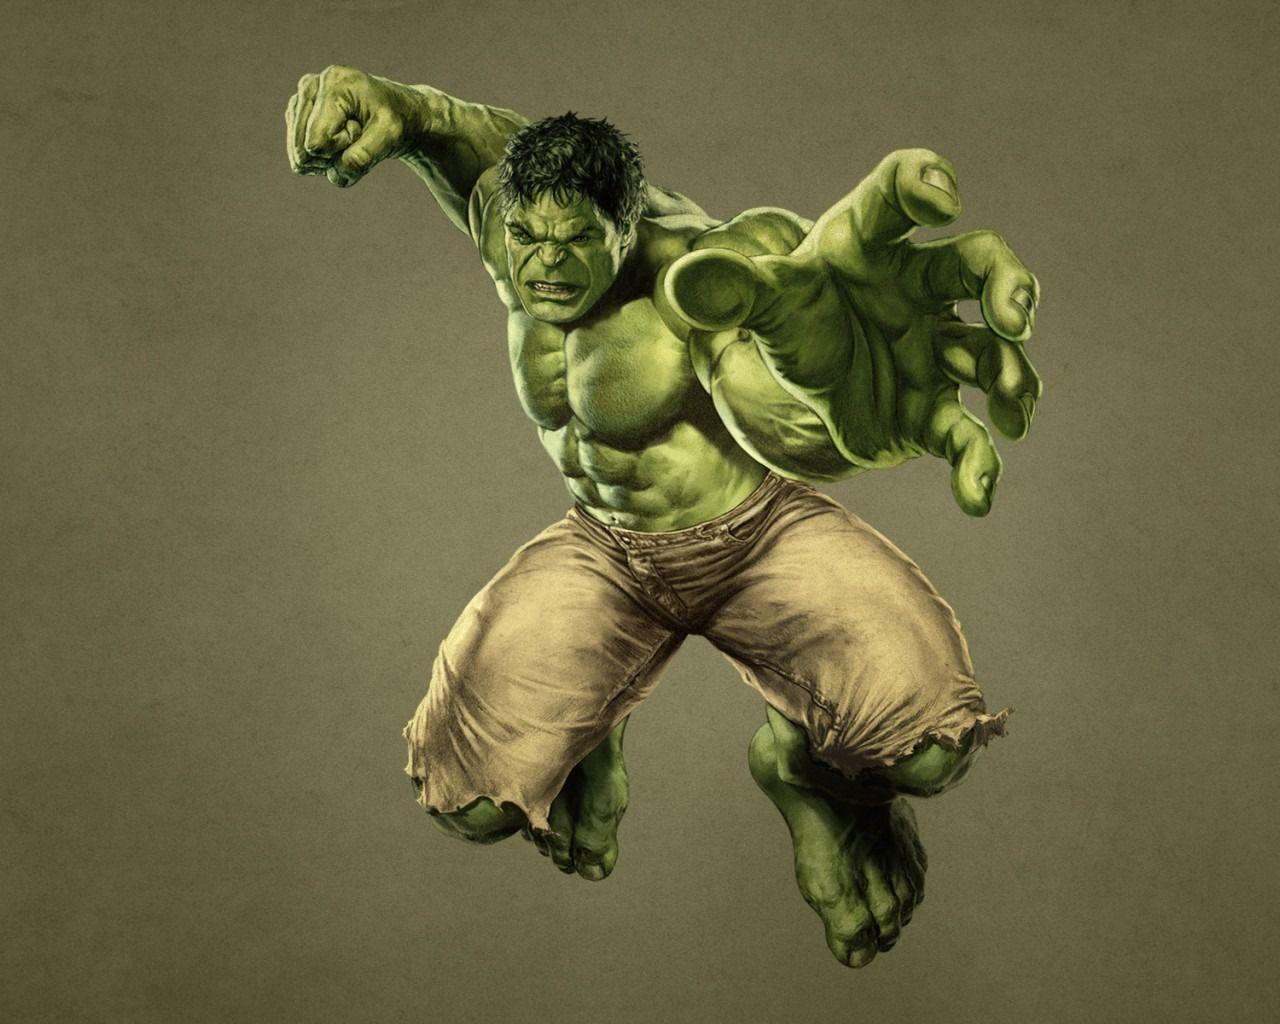 Avengers Movie Wallpaper Hulk Image & Picture